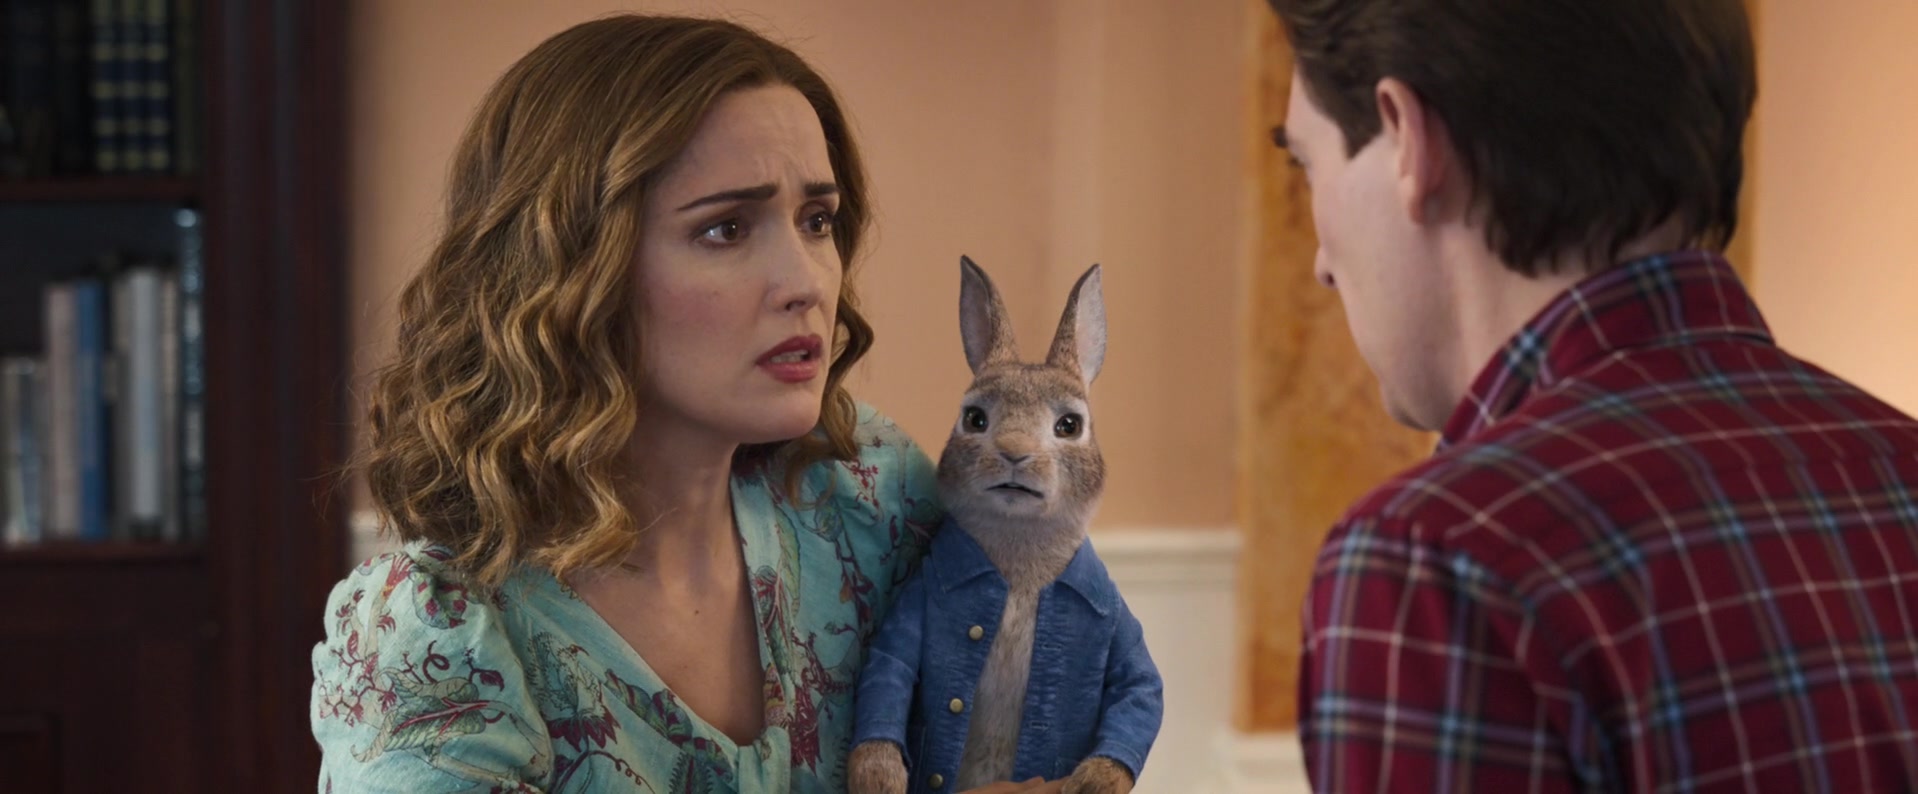 Включи про кролика. Роуз Бирн кролик Питер. Донал Глисон кролик Питер 2. Кролик Питер 2 / Peter Rabbit 2: the Runaway (2021). Кролик Питер Беатрис актриса.